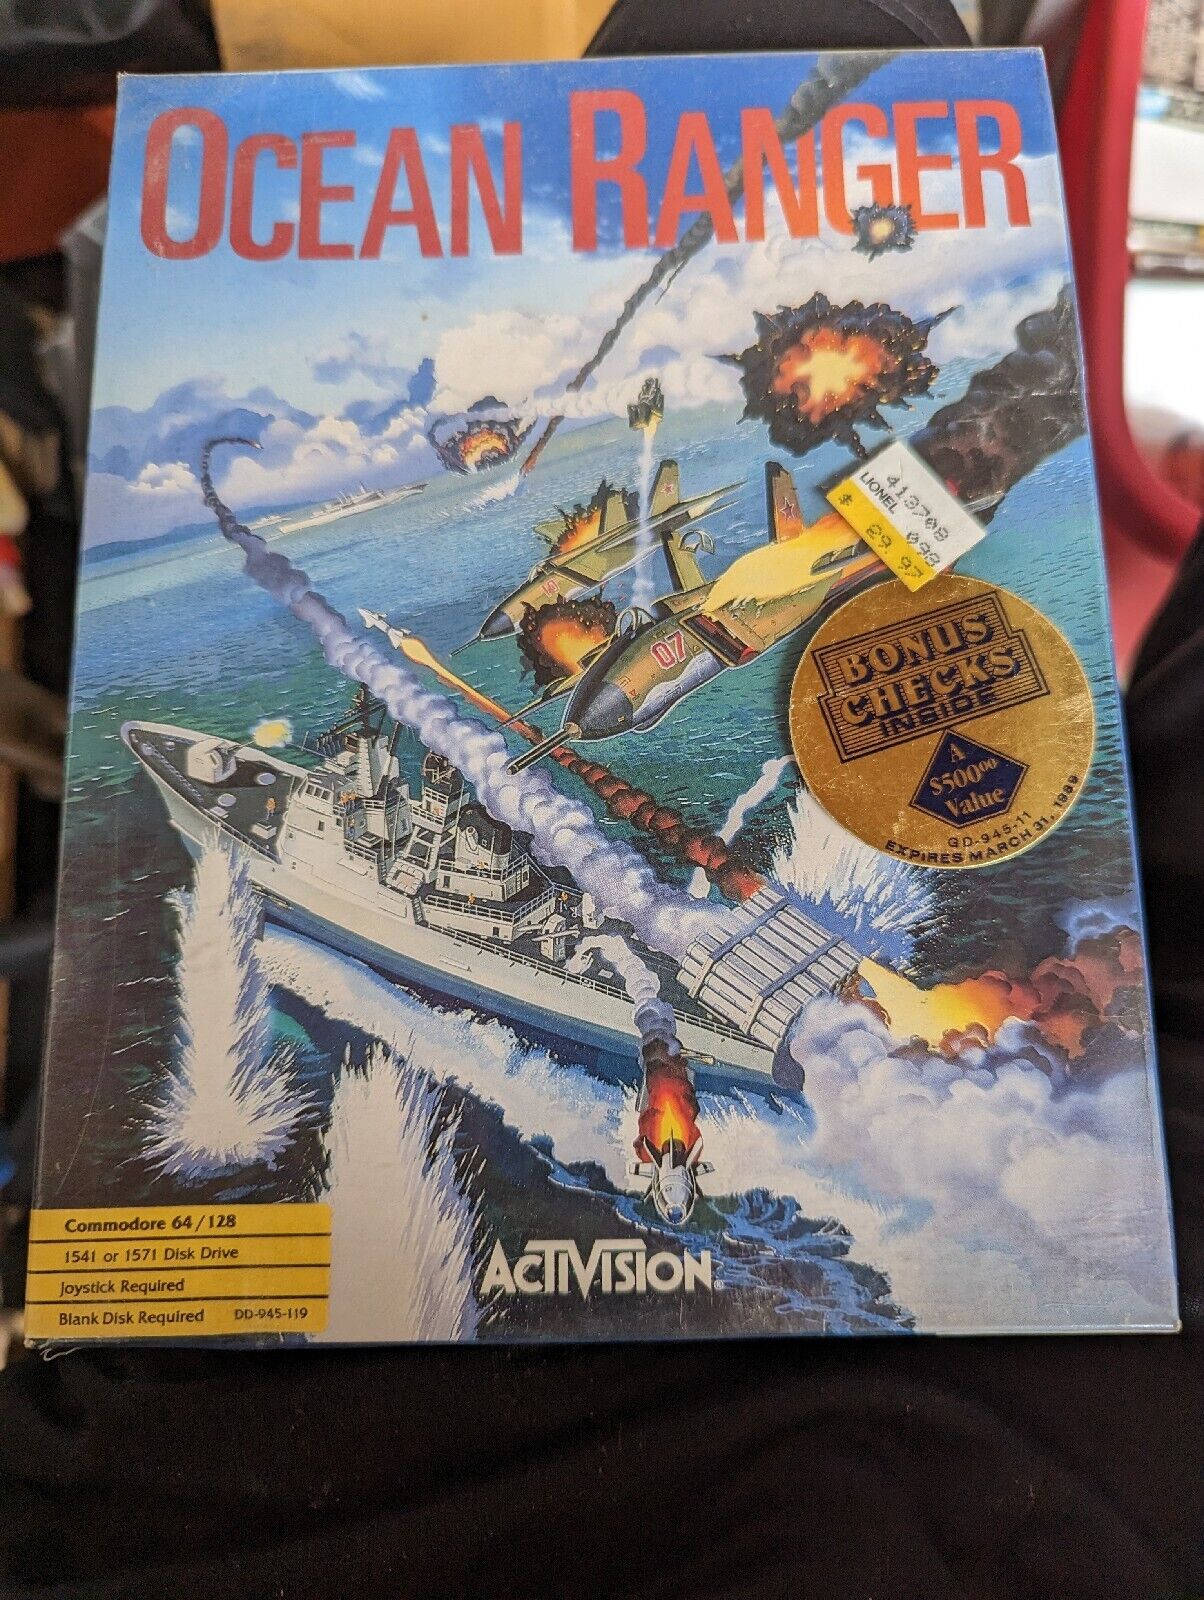 Ocean Ranger - Commodore 64 128 game on floppy disk in Brand New Shrink Wrapped